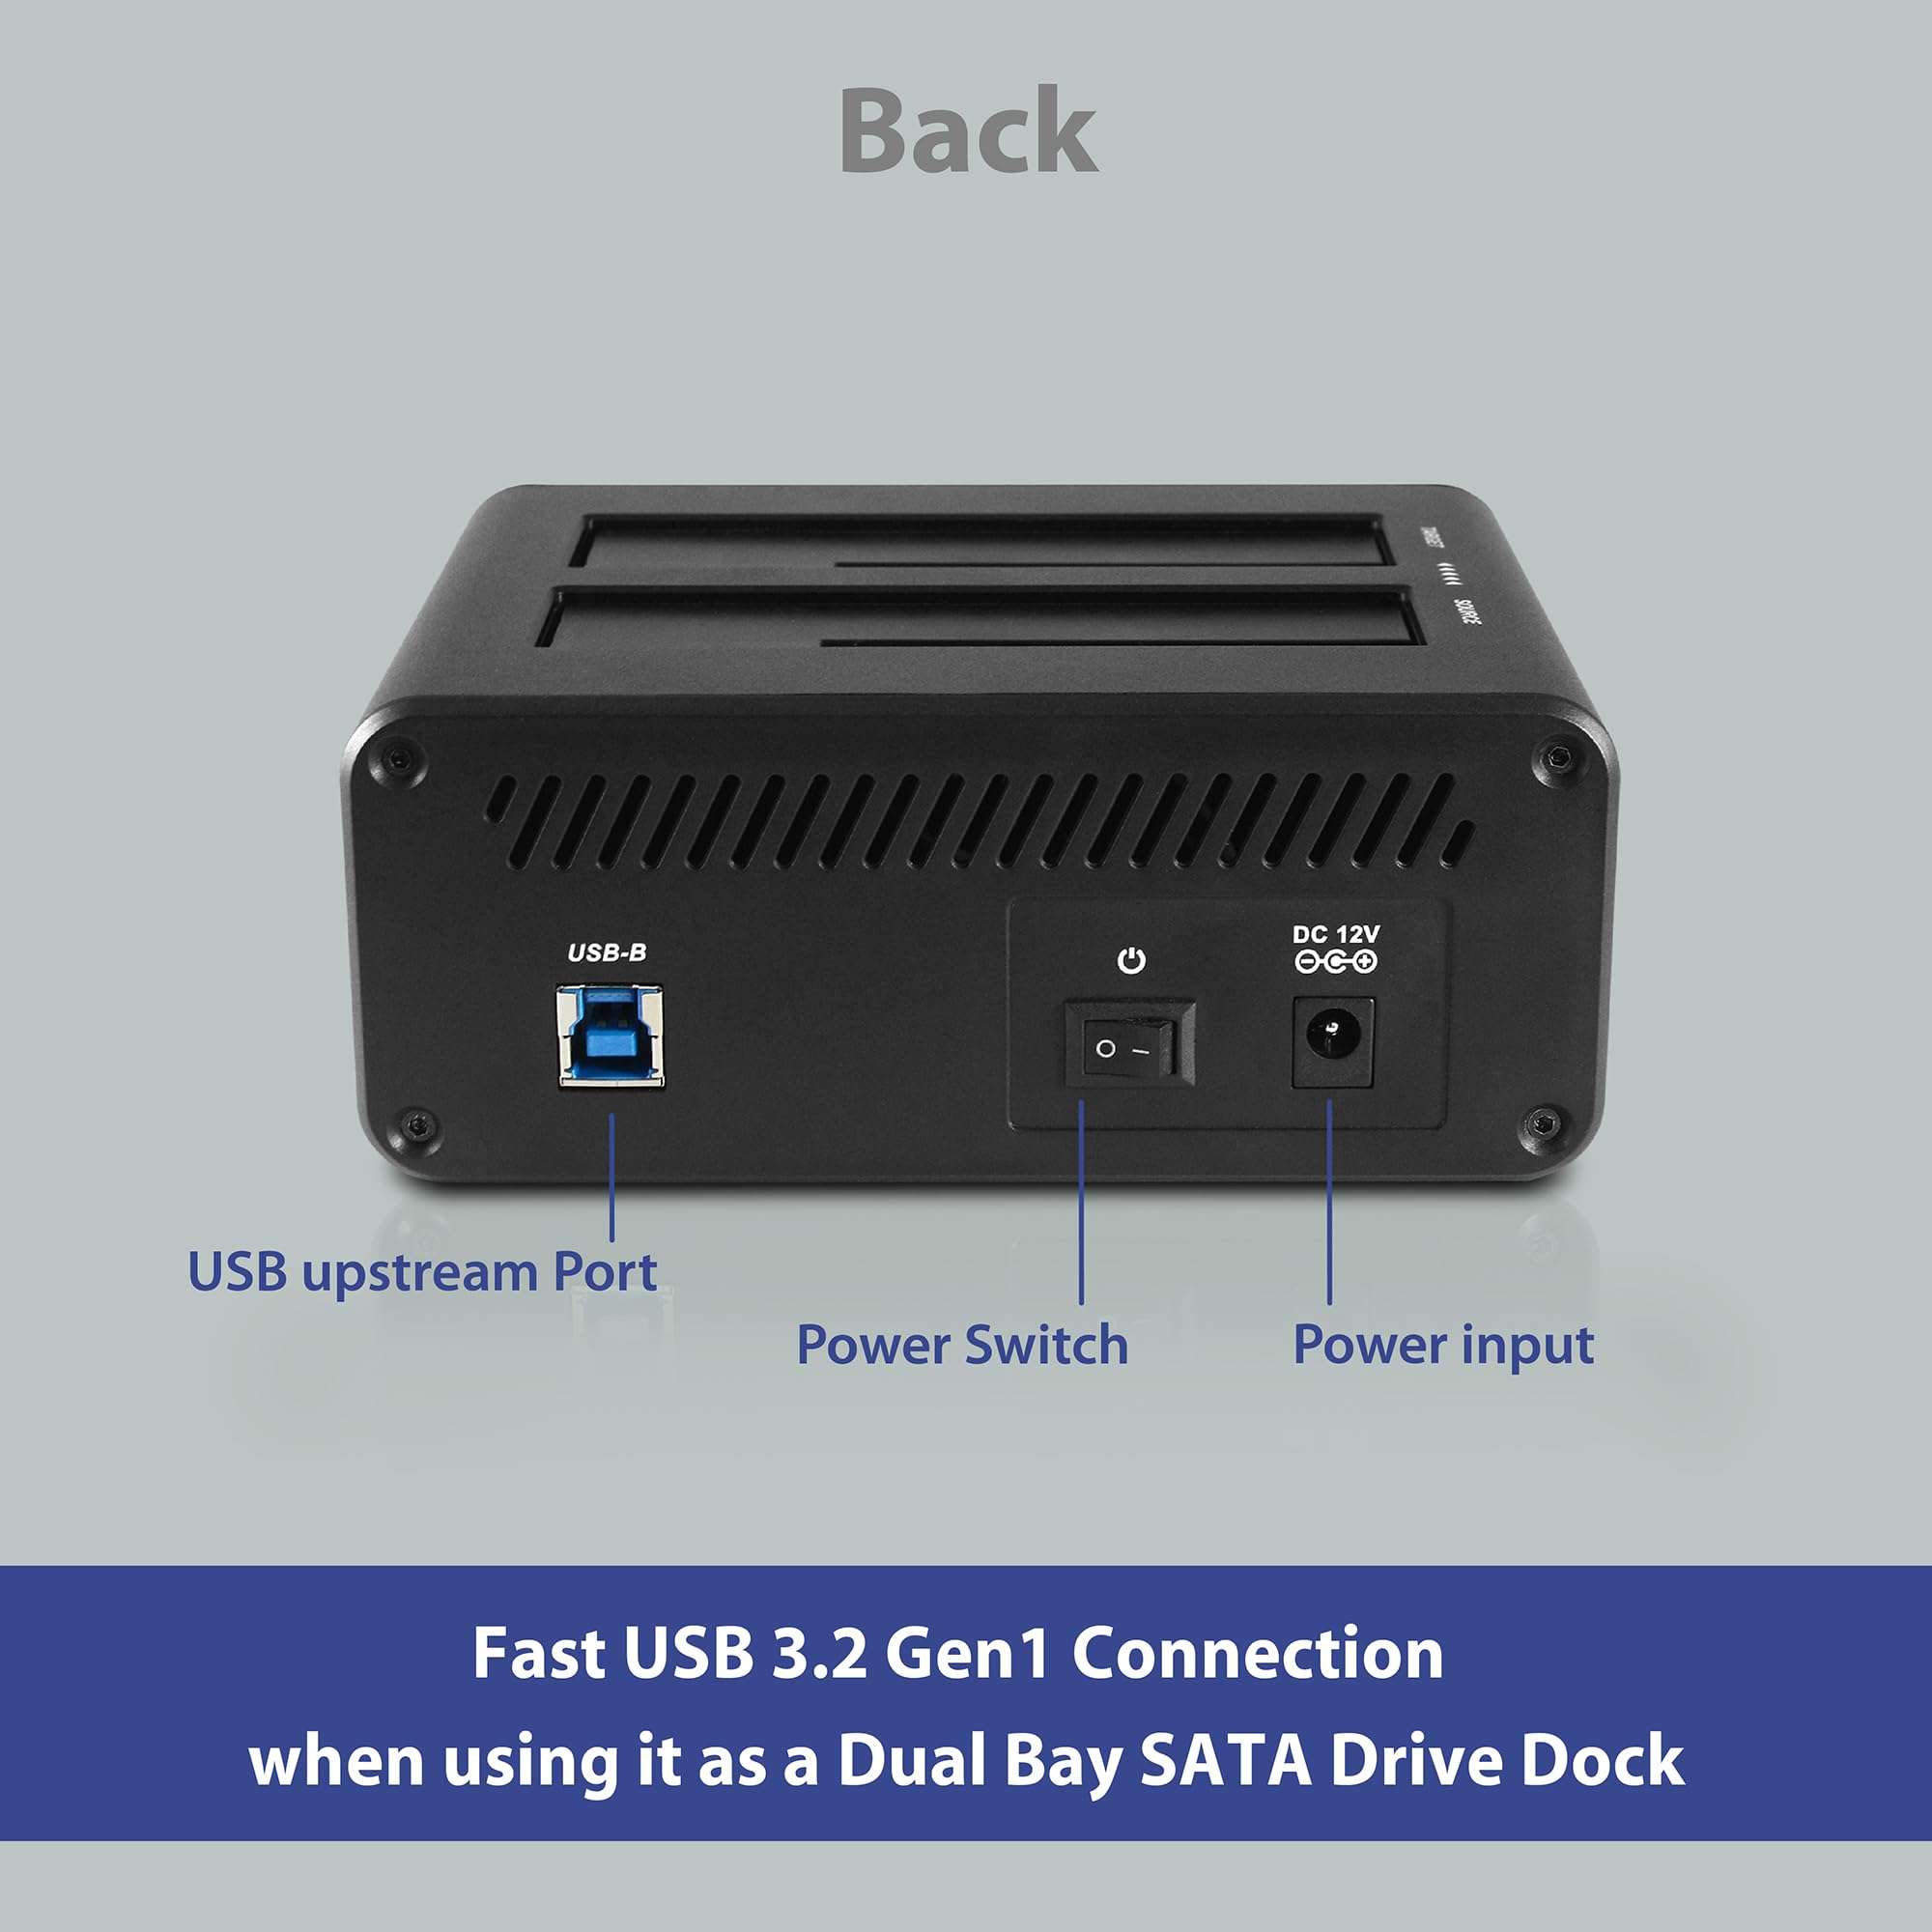 NexStar JX, USB 3.2 Gen1, Dual Bay Dock for SATA III Drive with Clone Function, USB 3.2 Gen1 (NST-D258S3-BK),Black